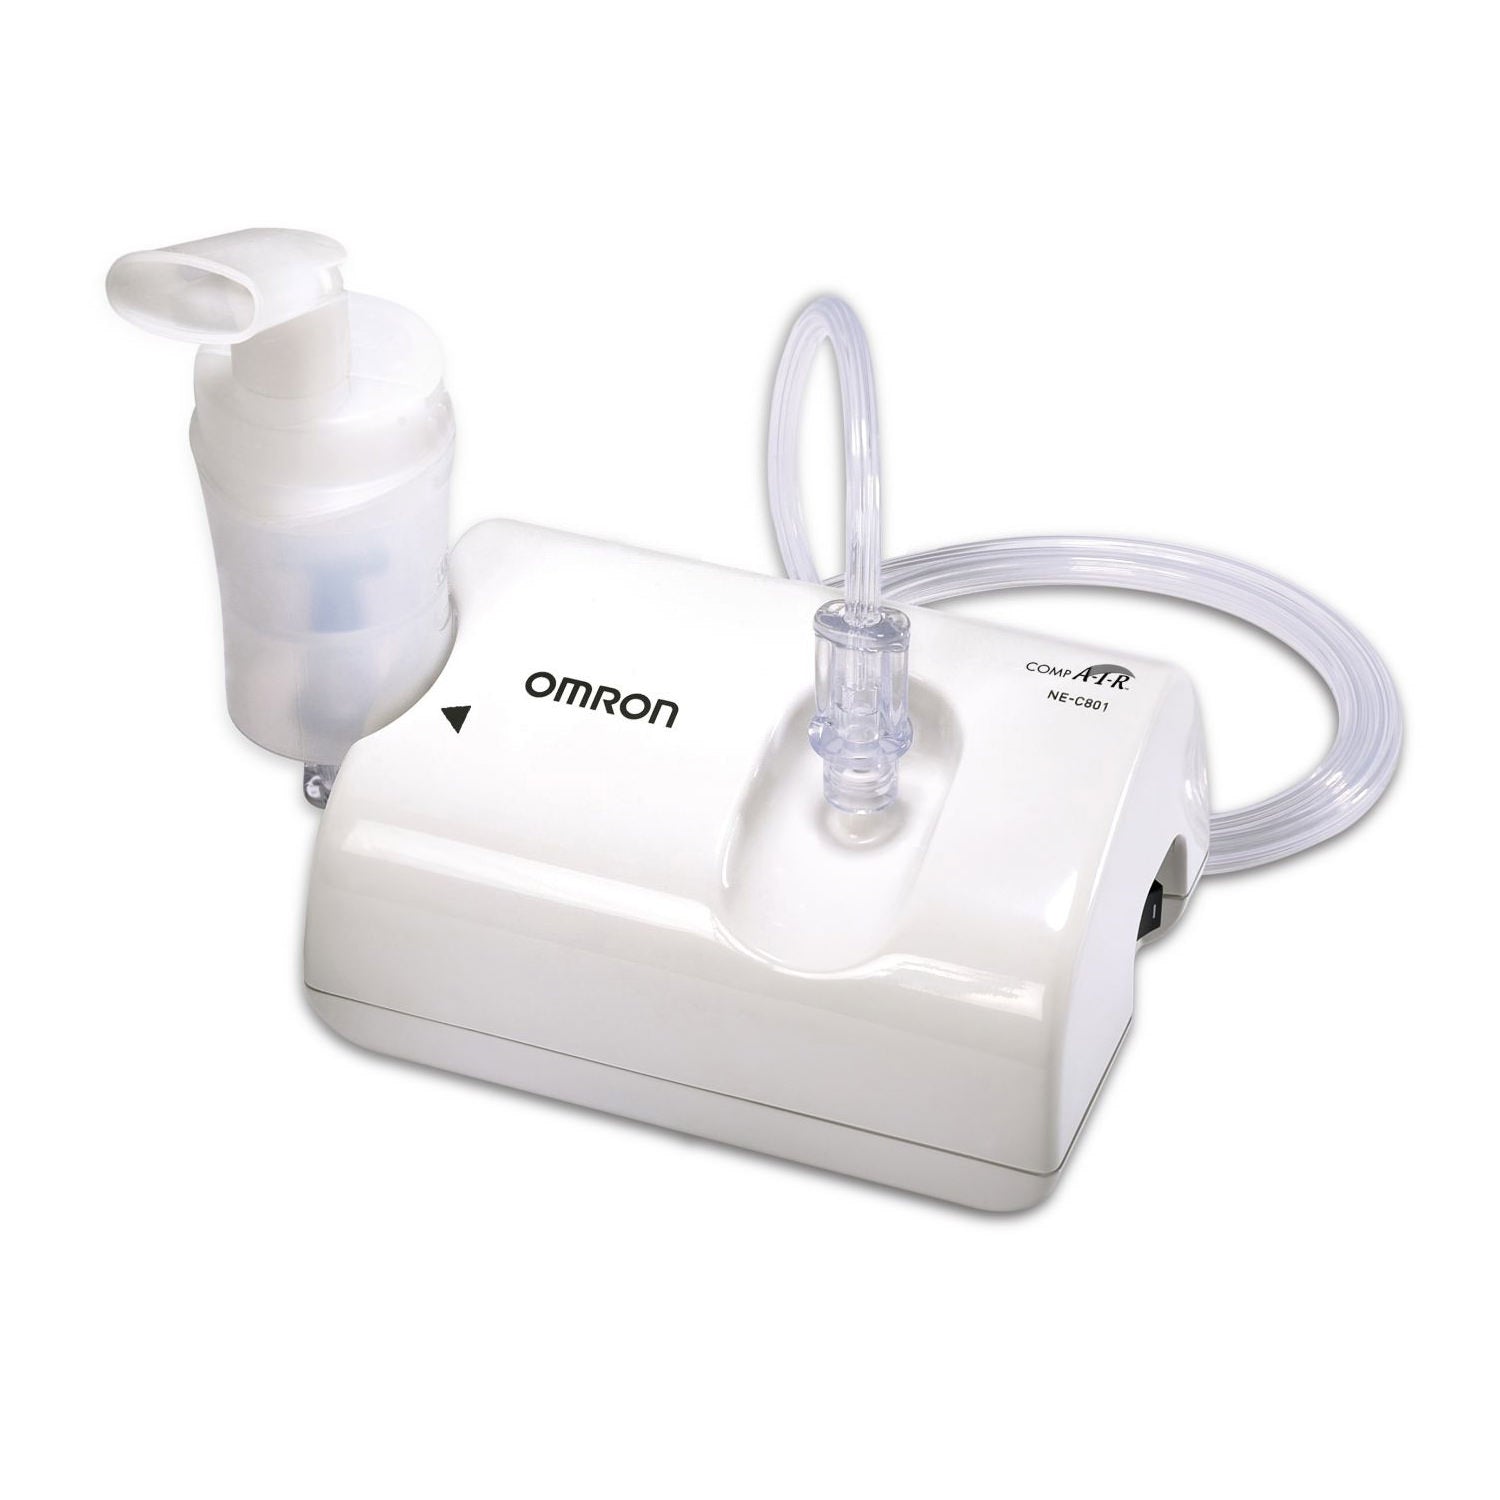 Aérosol Omron CompAir C801 inhalateur - nébuliseur